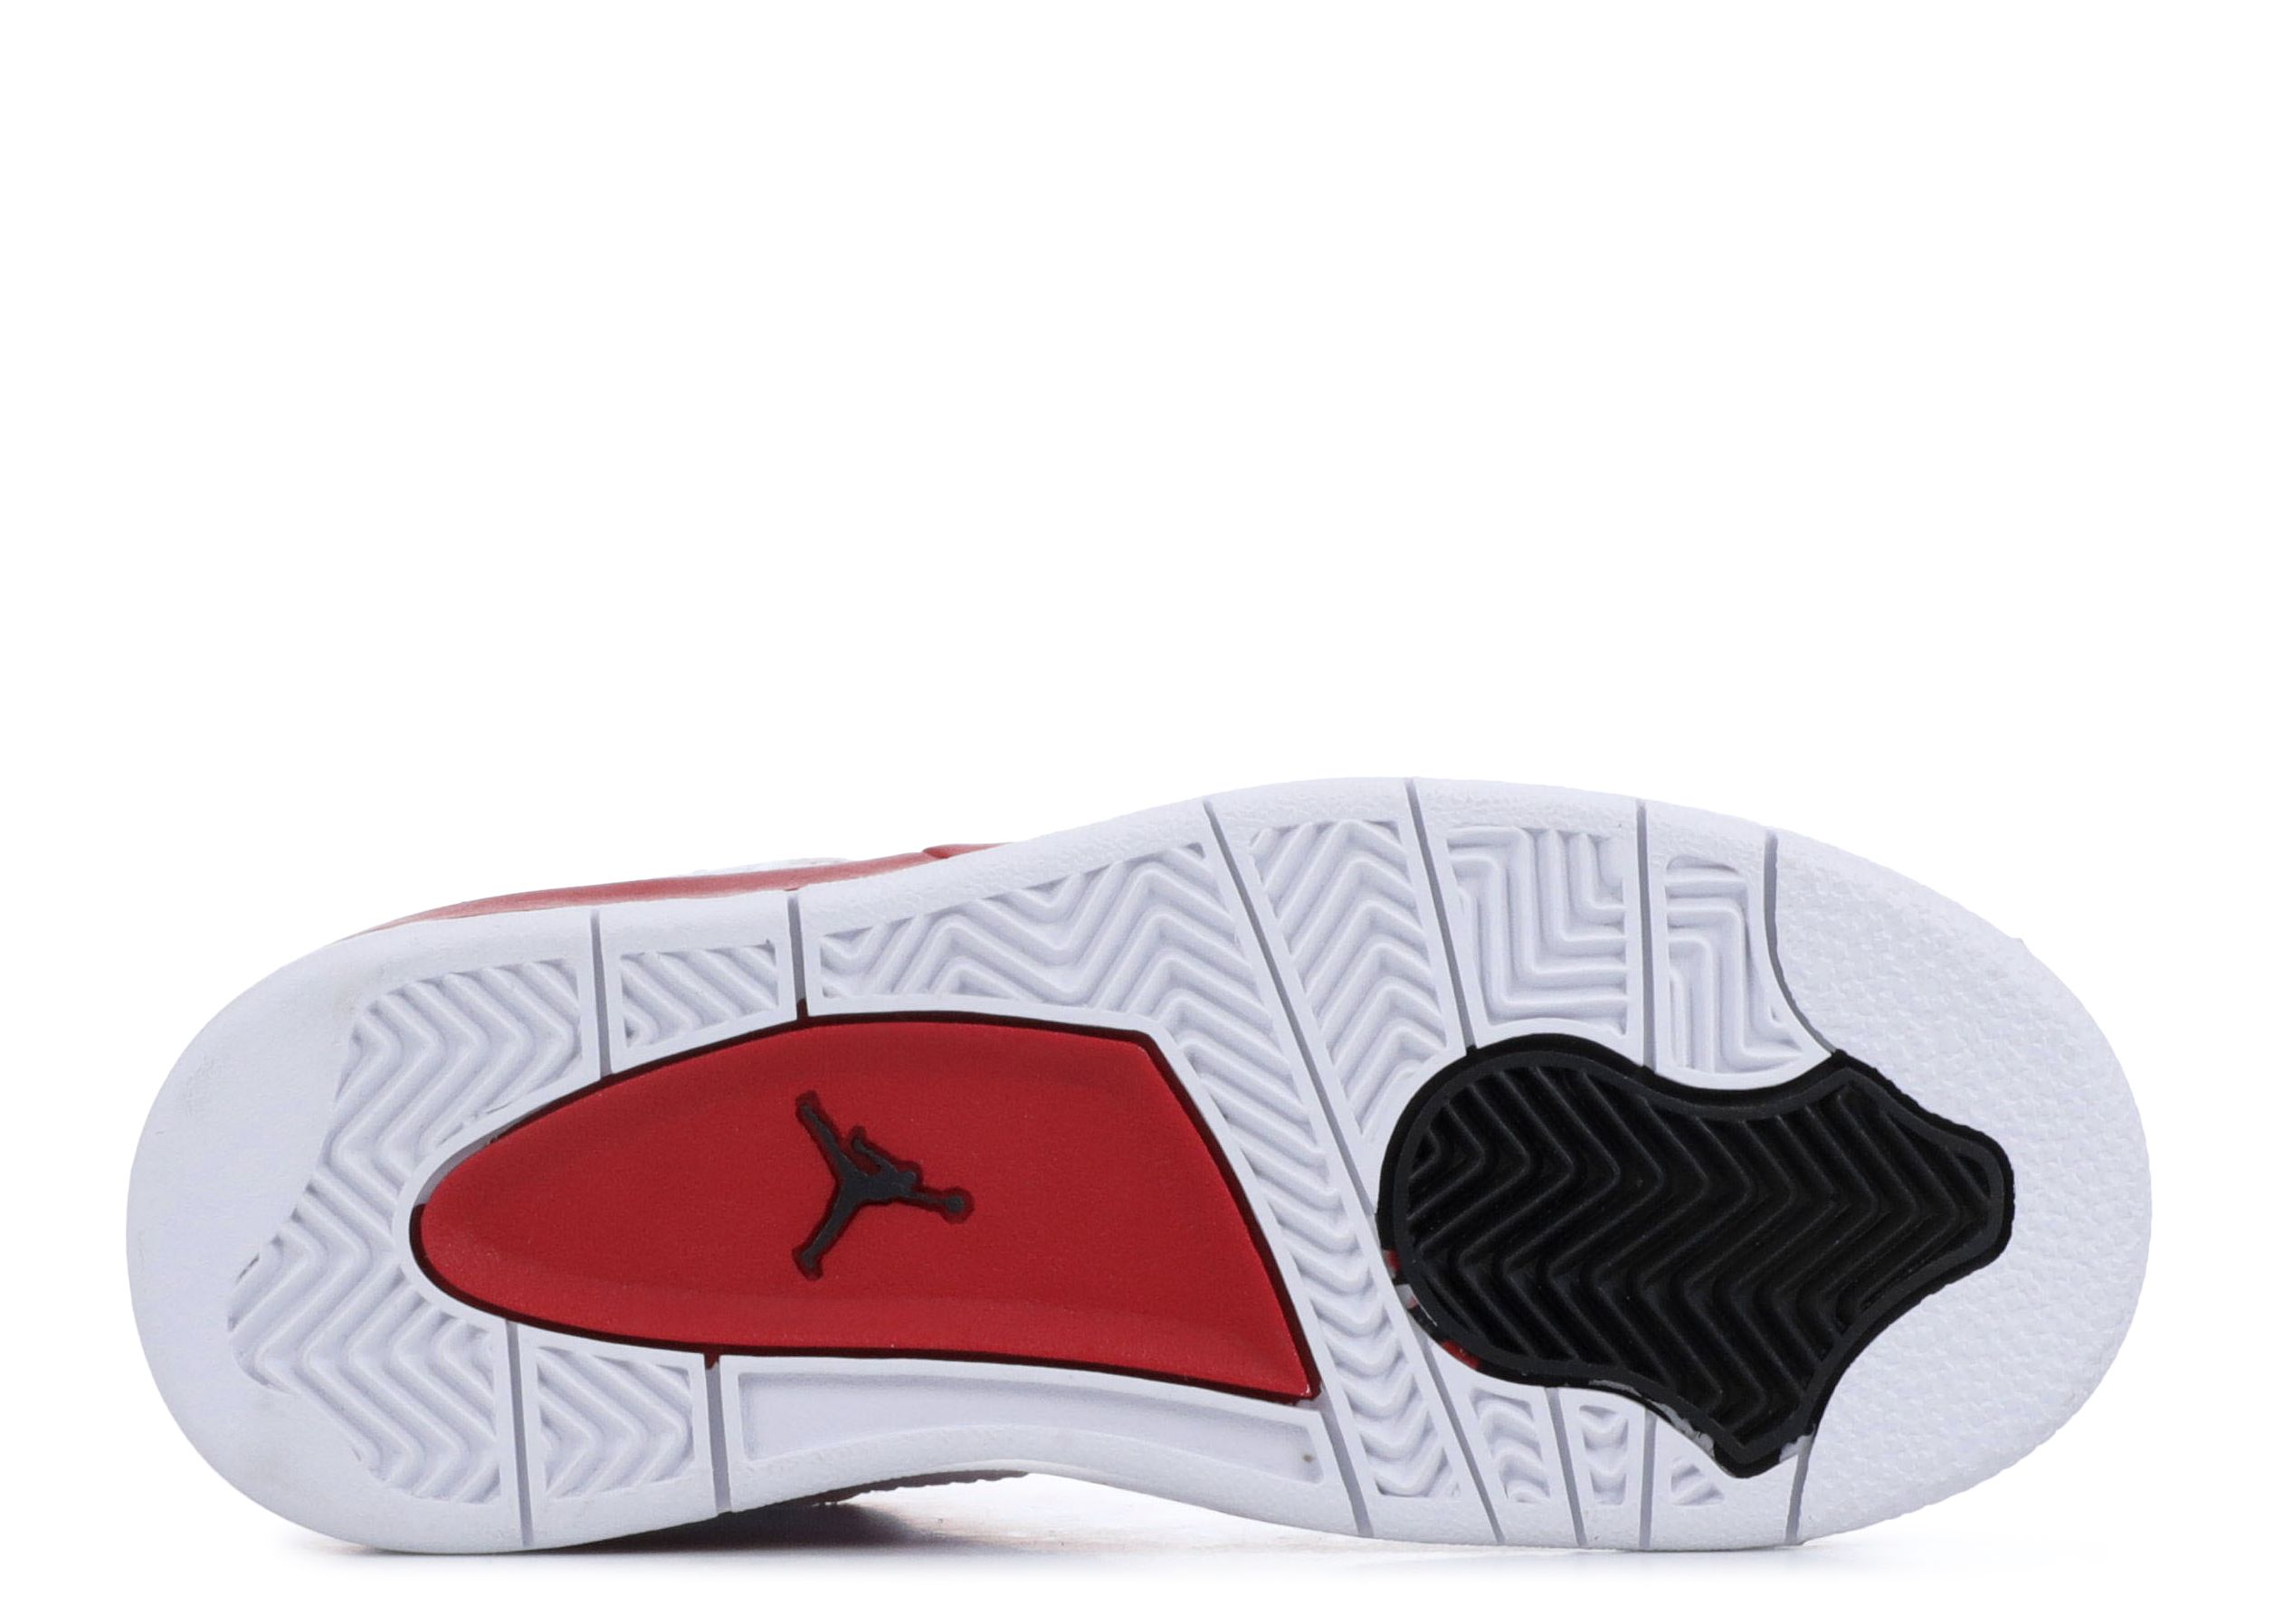 Buy Air Jordan 4 Retro - 308497 106, Gym Red/White/Black, 11.5 at